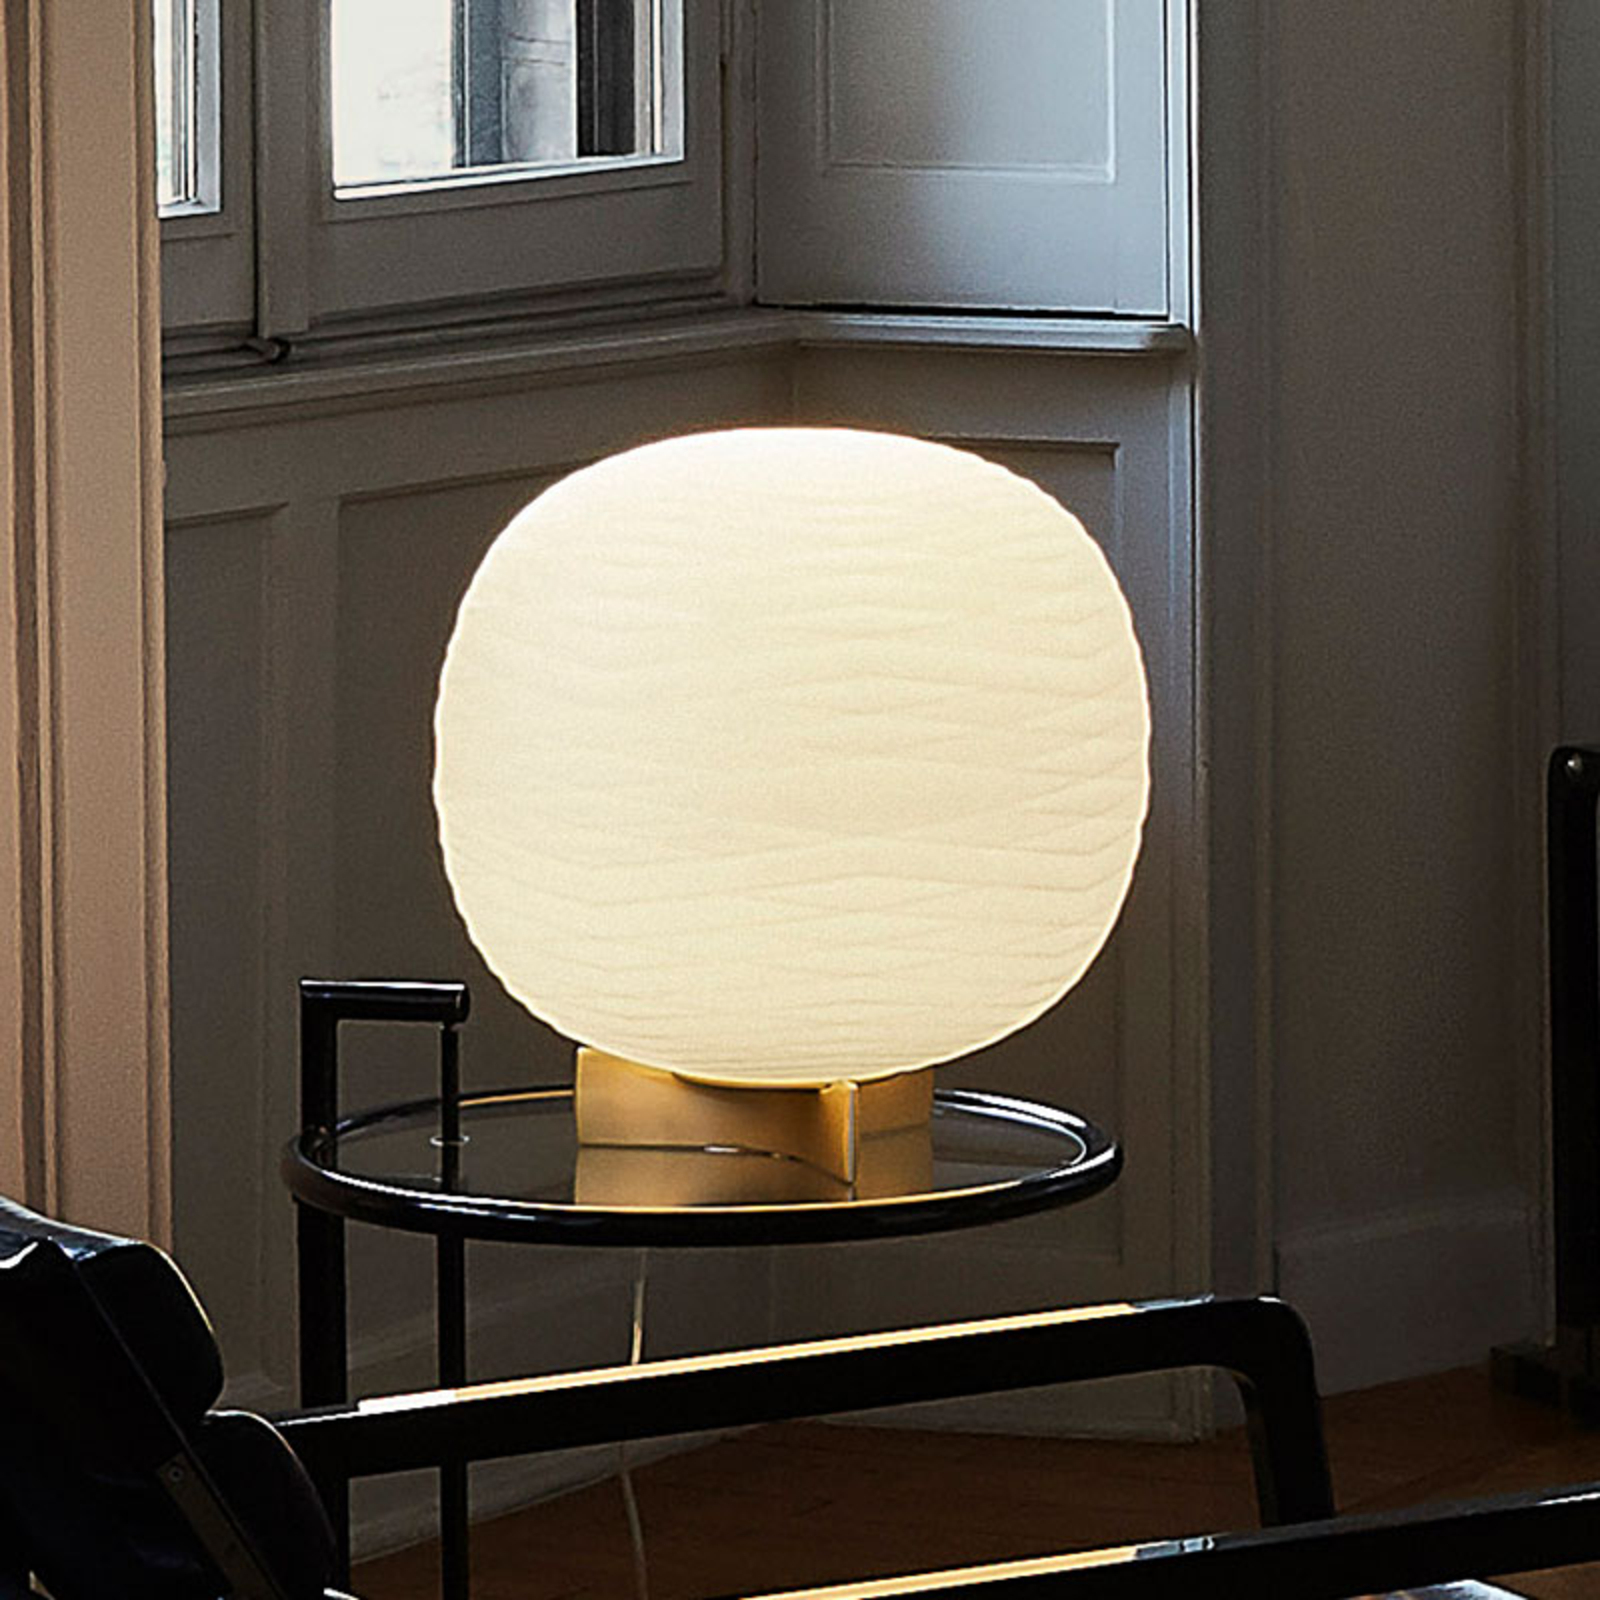 Foscarini Gem glass table lamp with dimmer